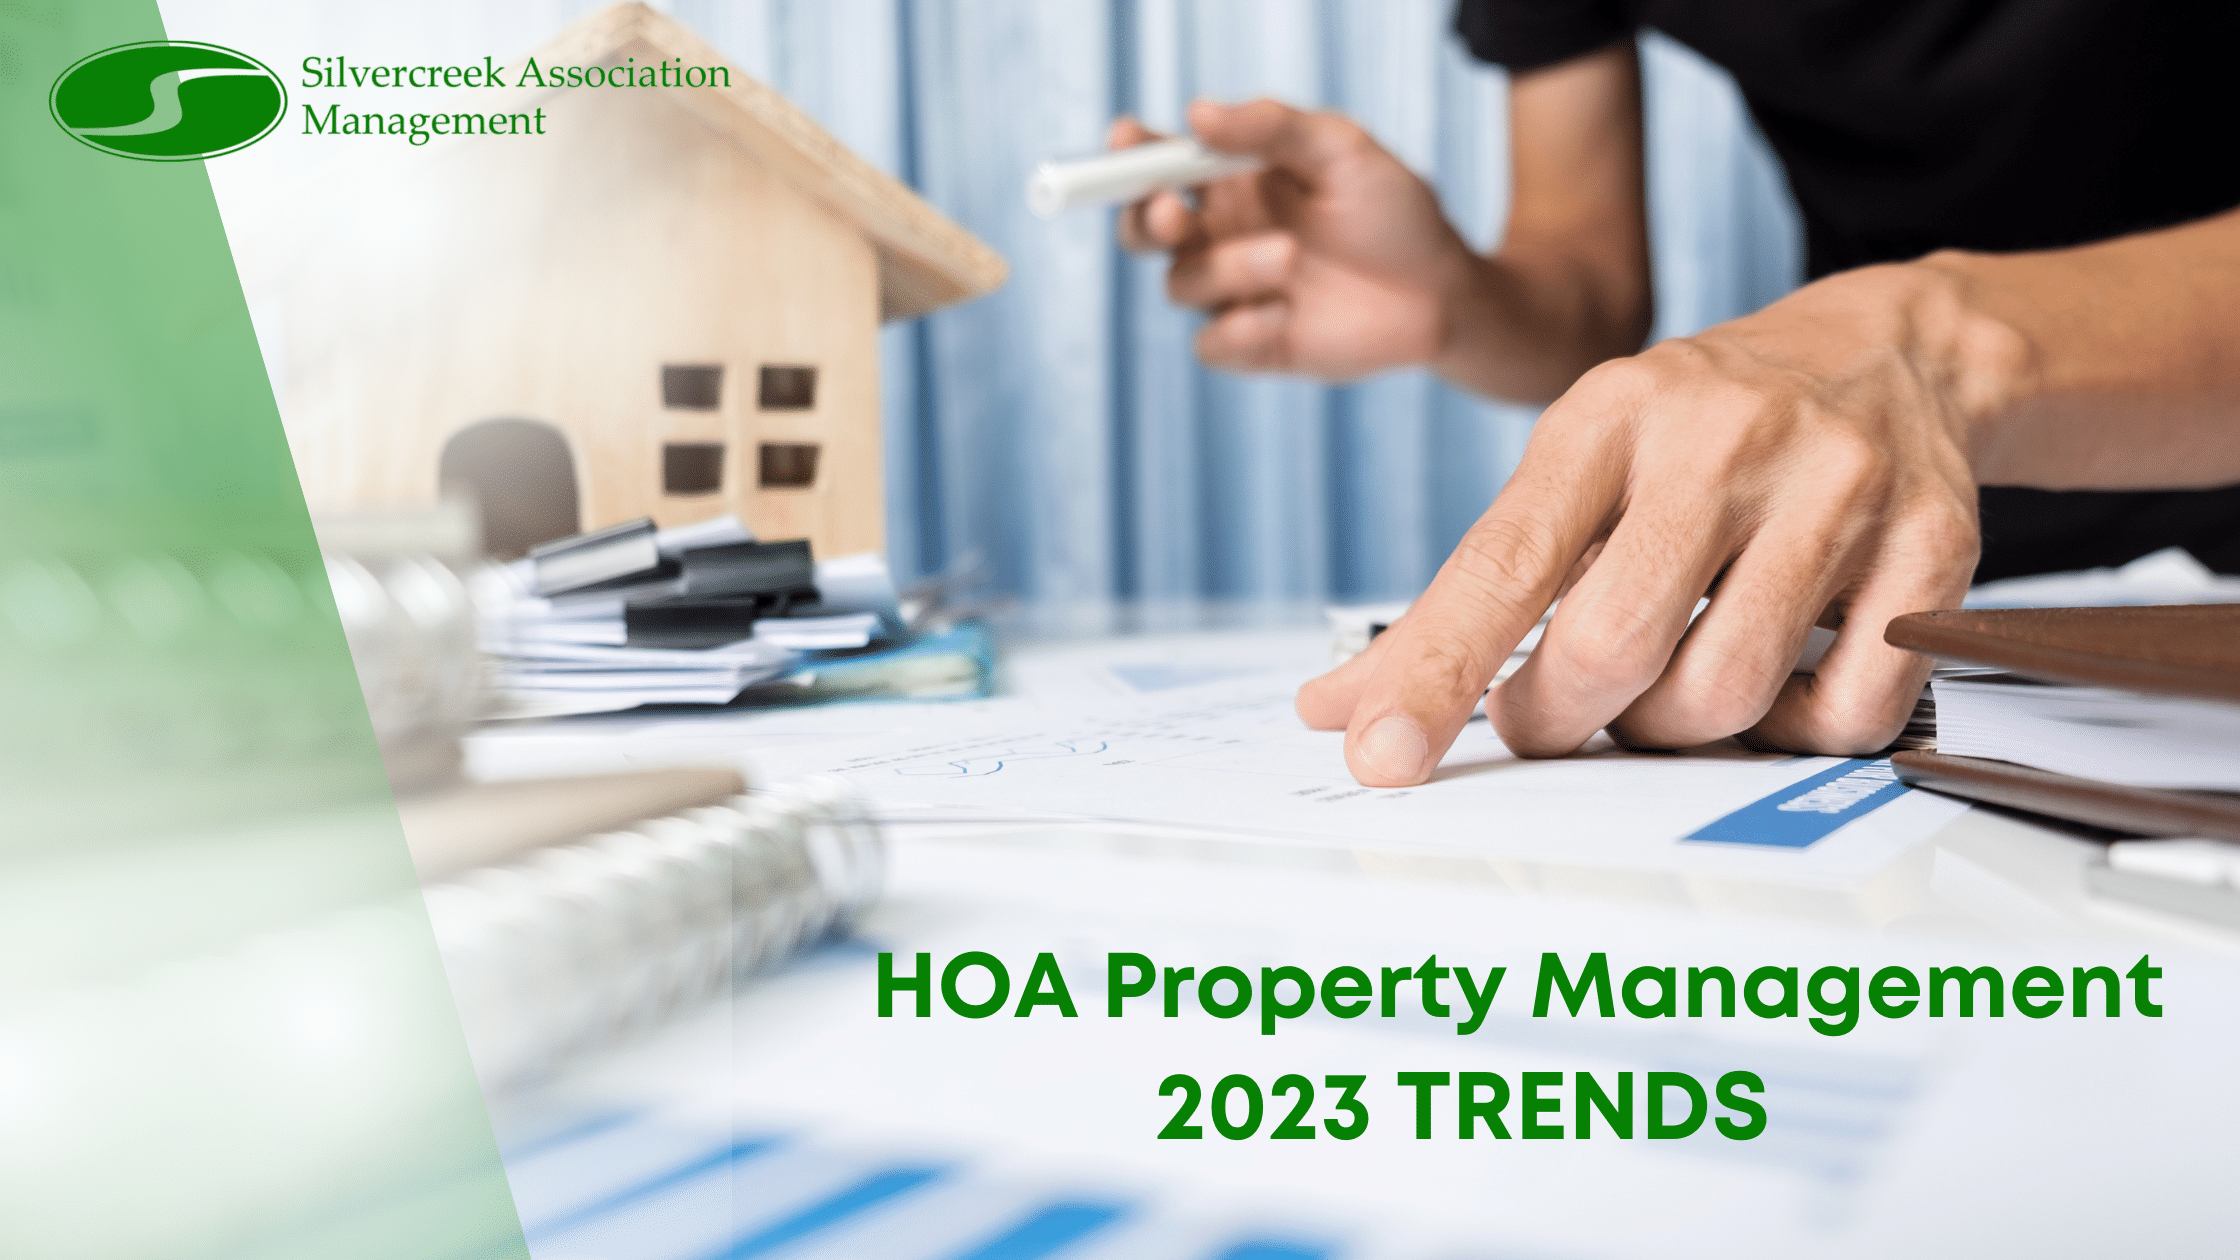 HOA Property Management: 2023 Trends